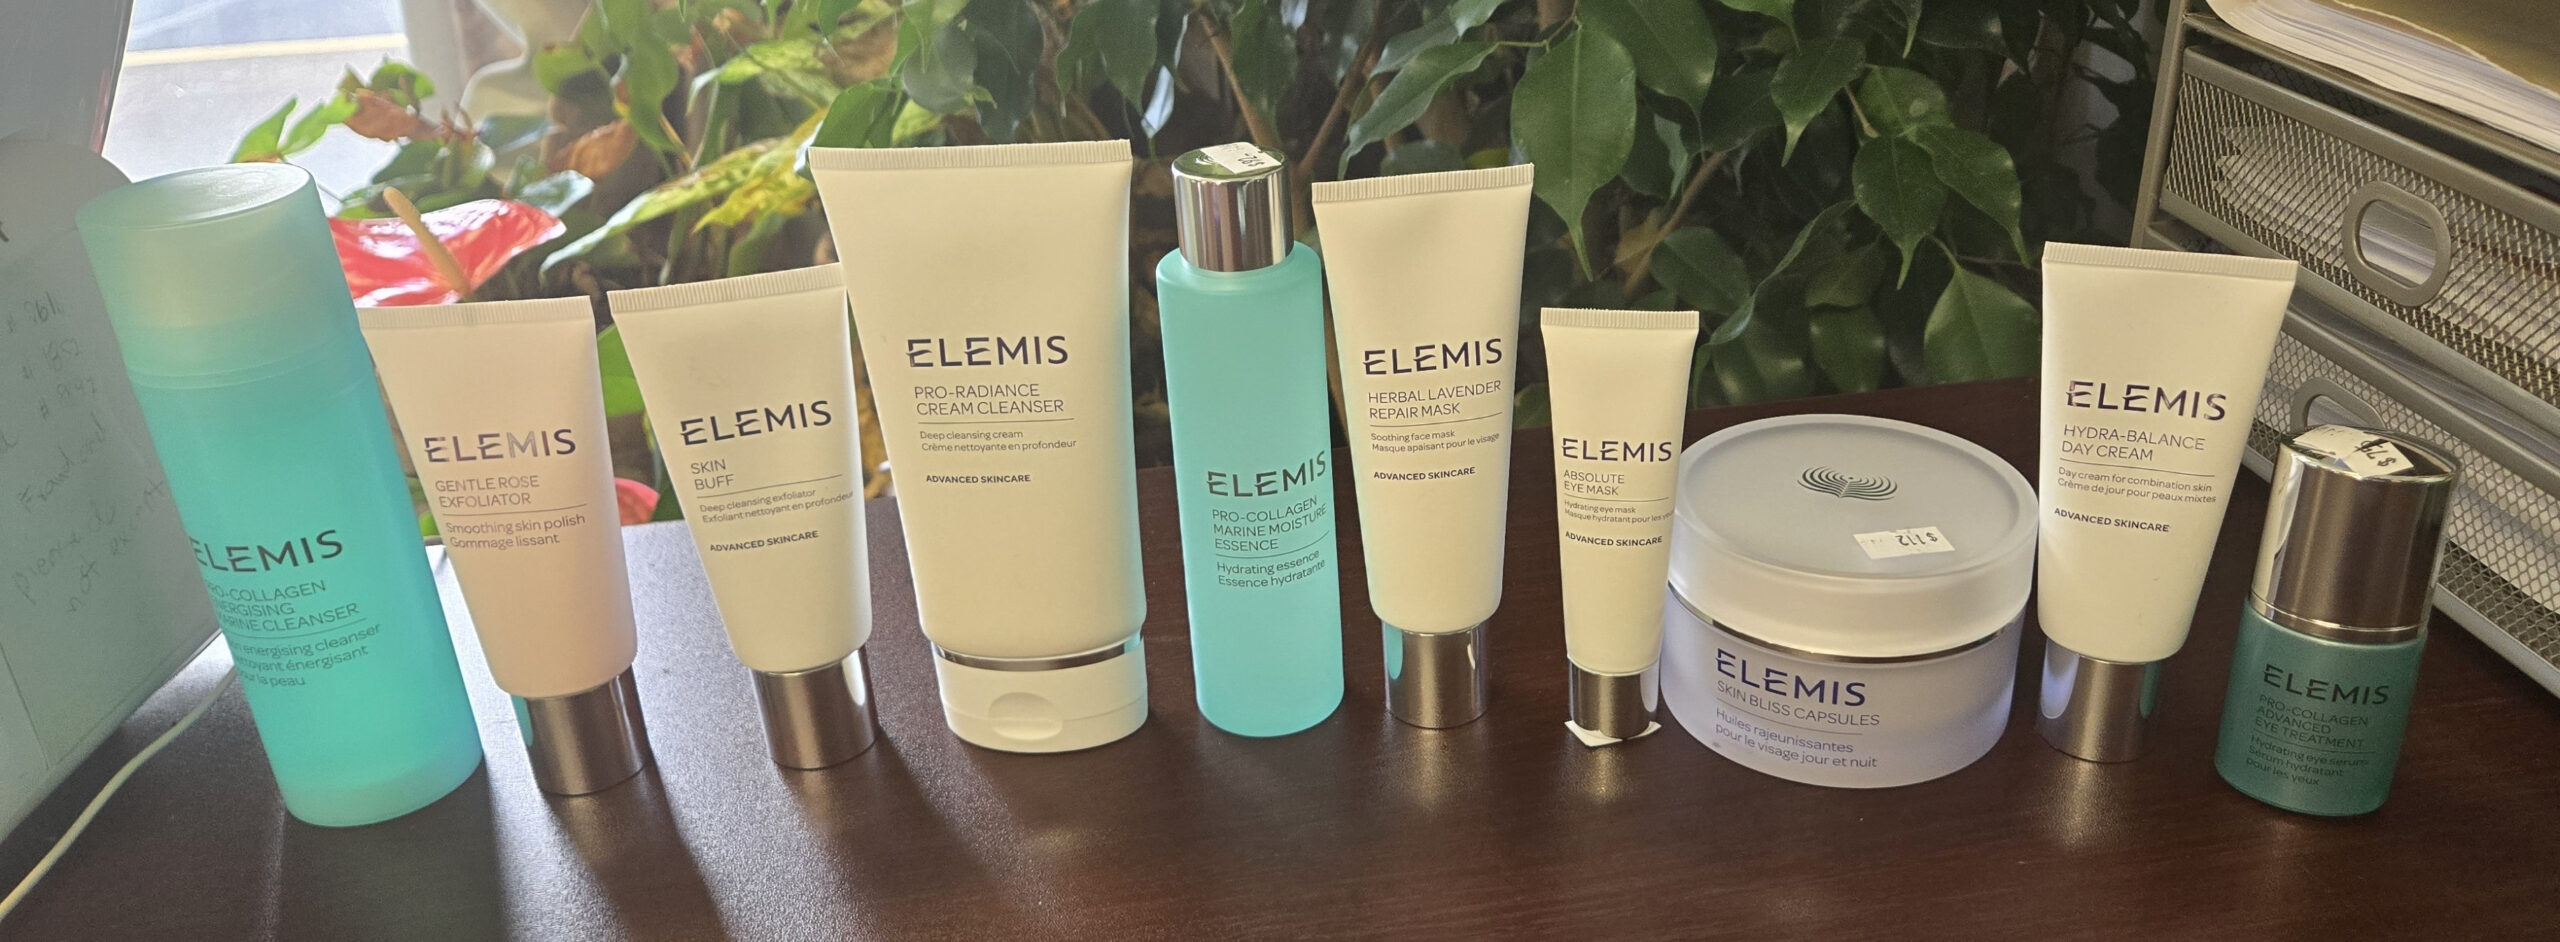 Elemis skin care products